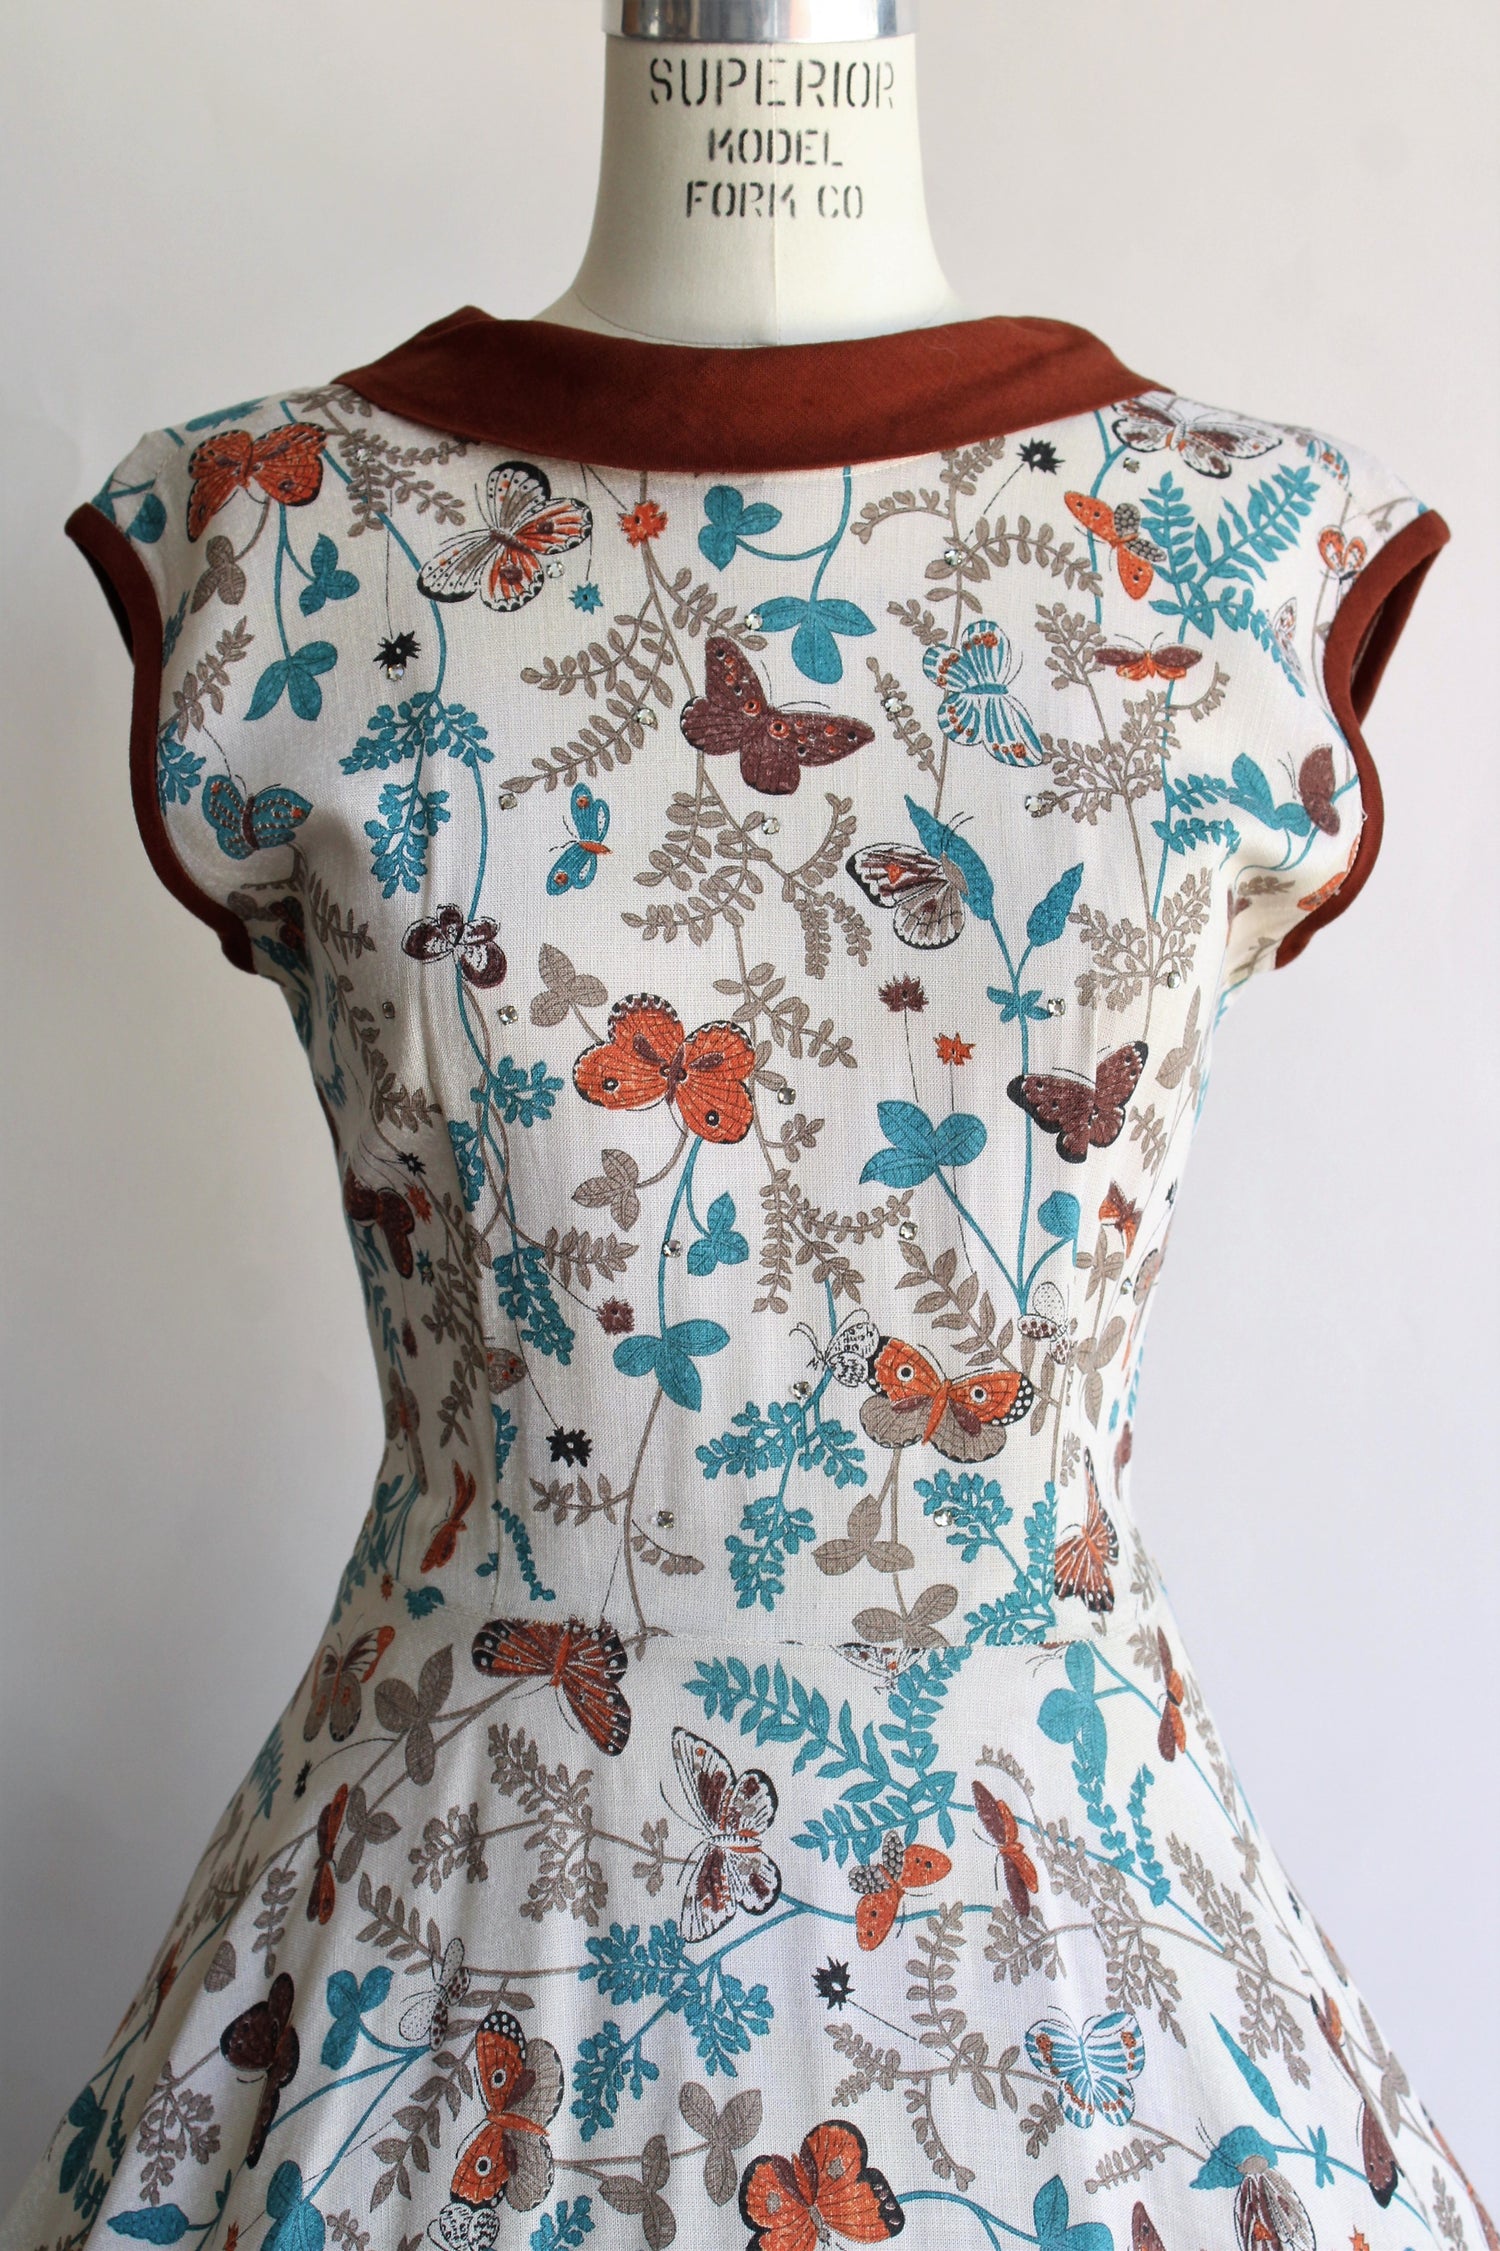 Vintage 1950s 1960s Butterfly Print Dress